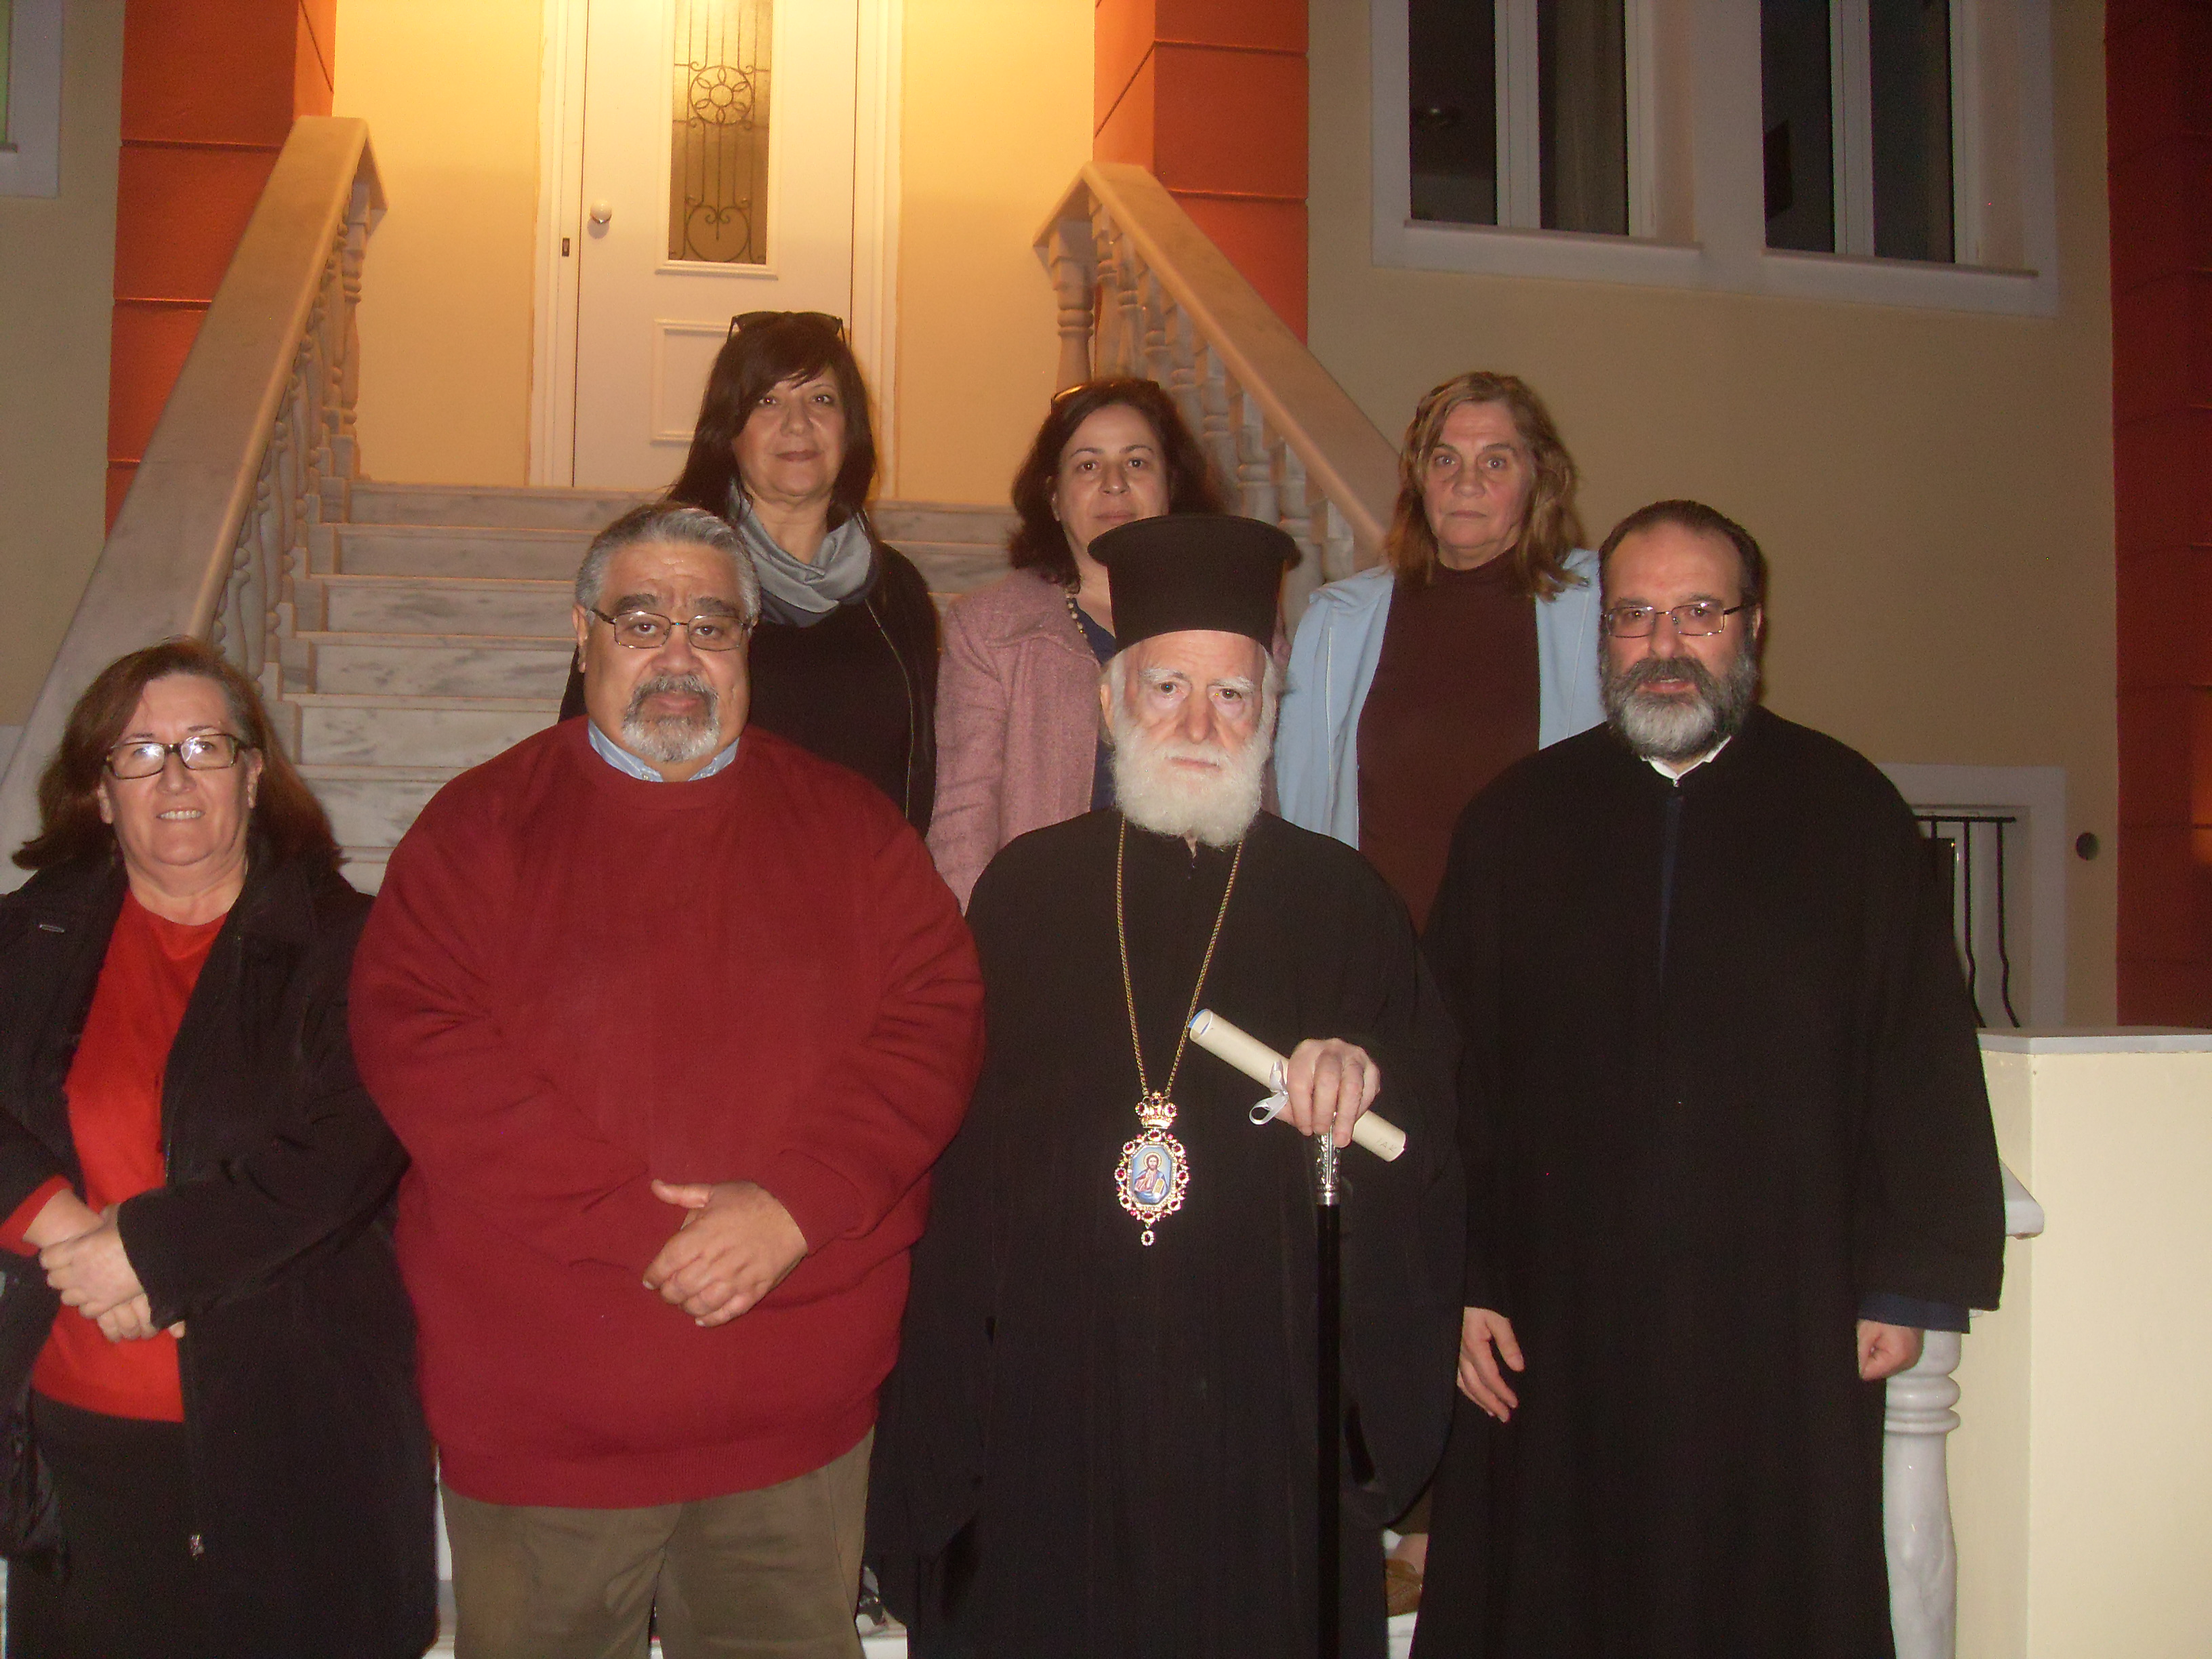 Eπίσκεψη του Αρχιεπισκόπου Κρήτης στον Πολιτιστικό Σύλλογο Αγ. Αικατερίνης